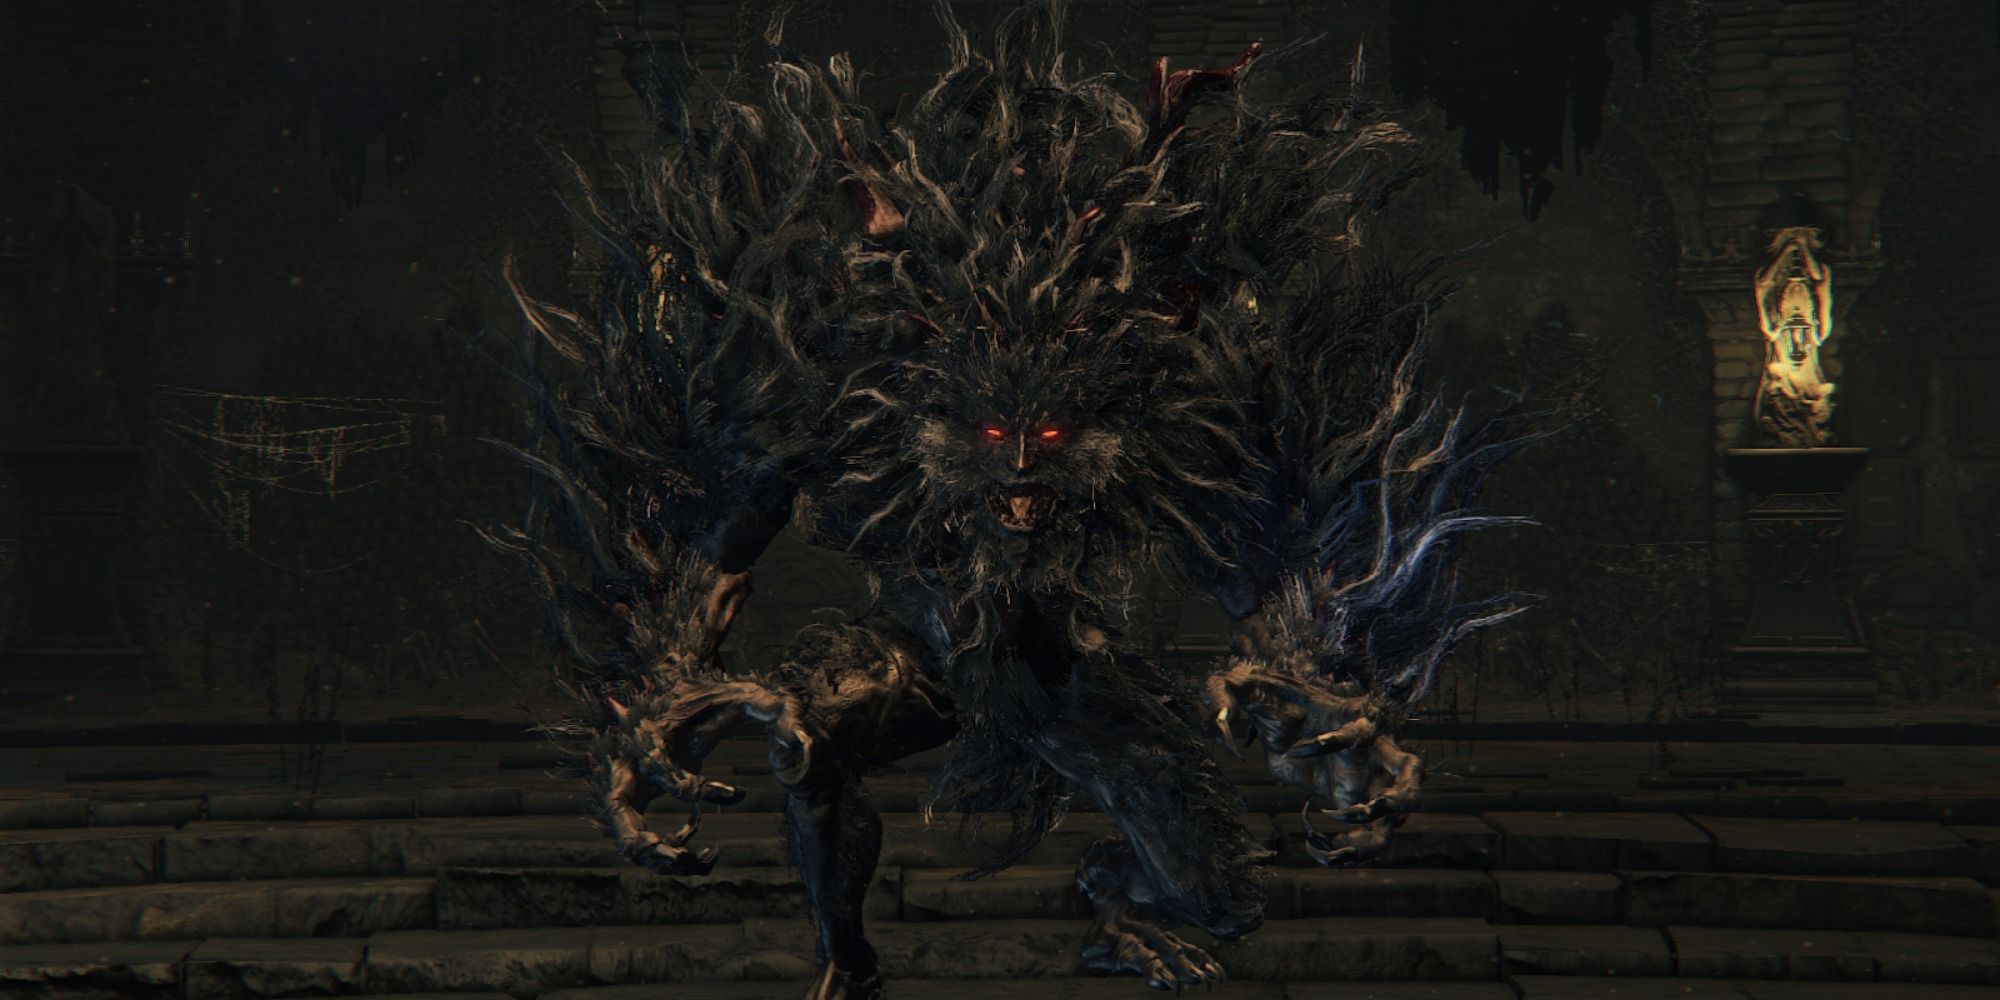 Abhorrent Beast boss fight in Bloodborne - a large, electrified werewolf monster